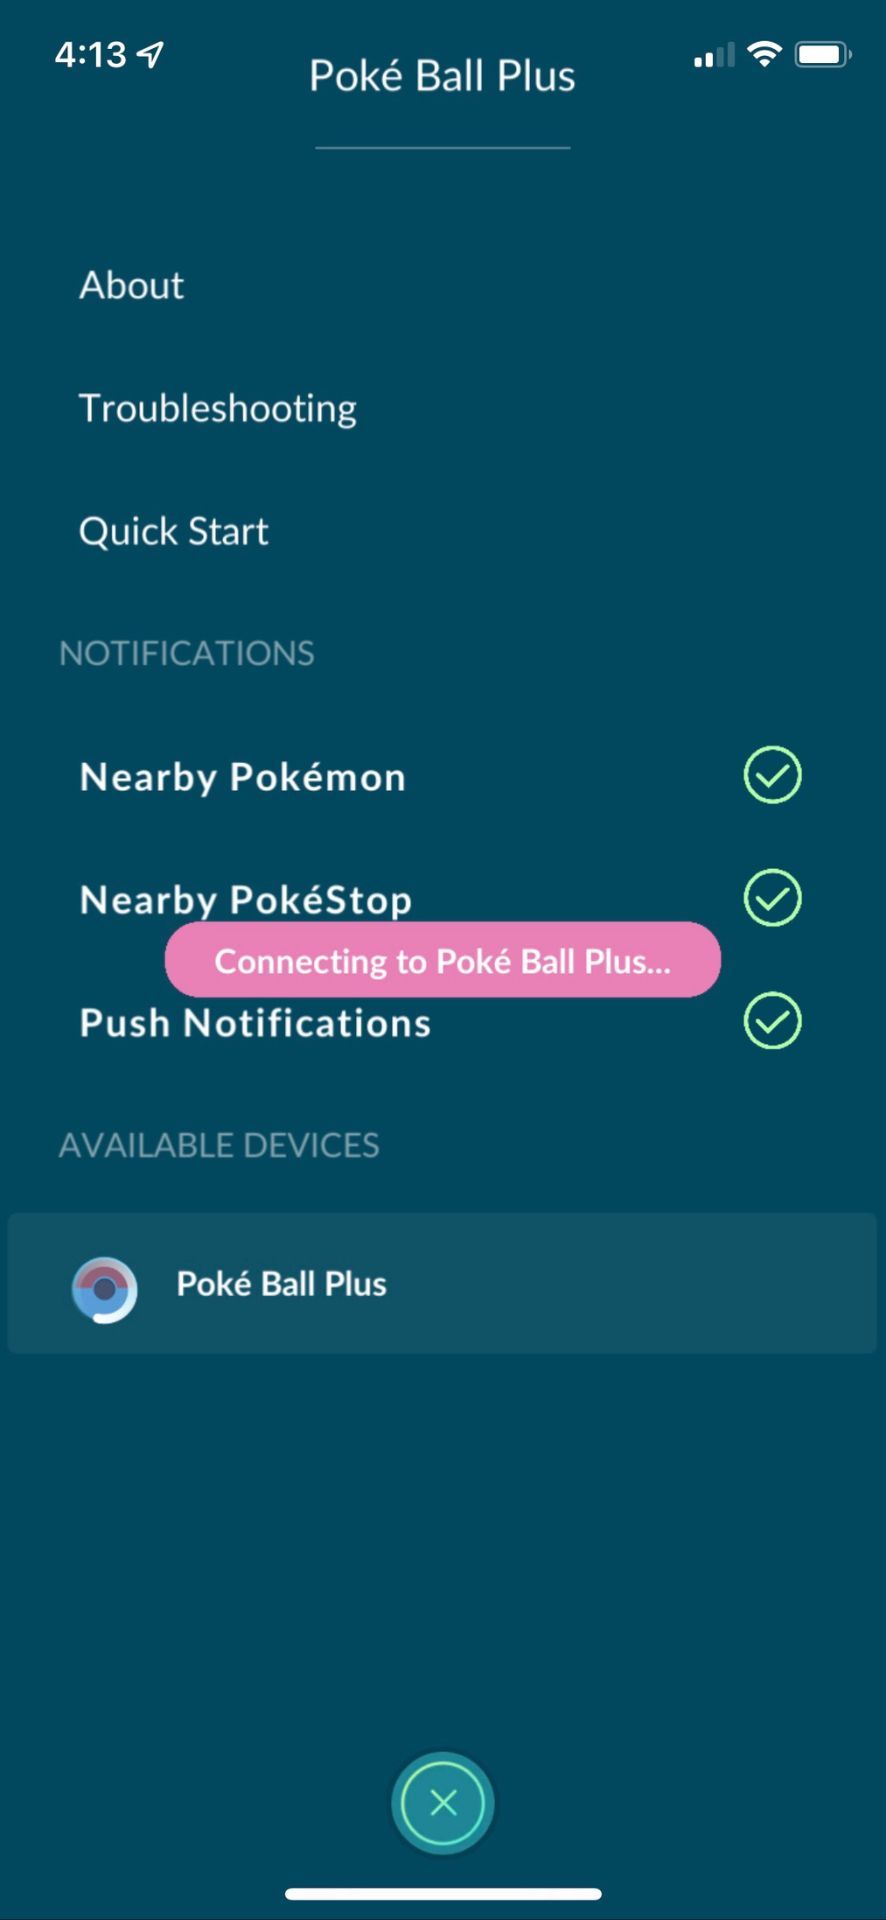 How to Connect and Use a Poké Ball Plus With Pokémon Go